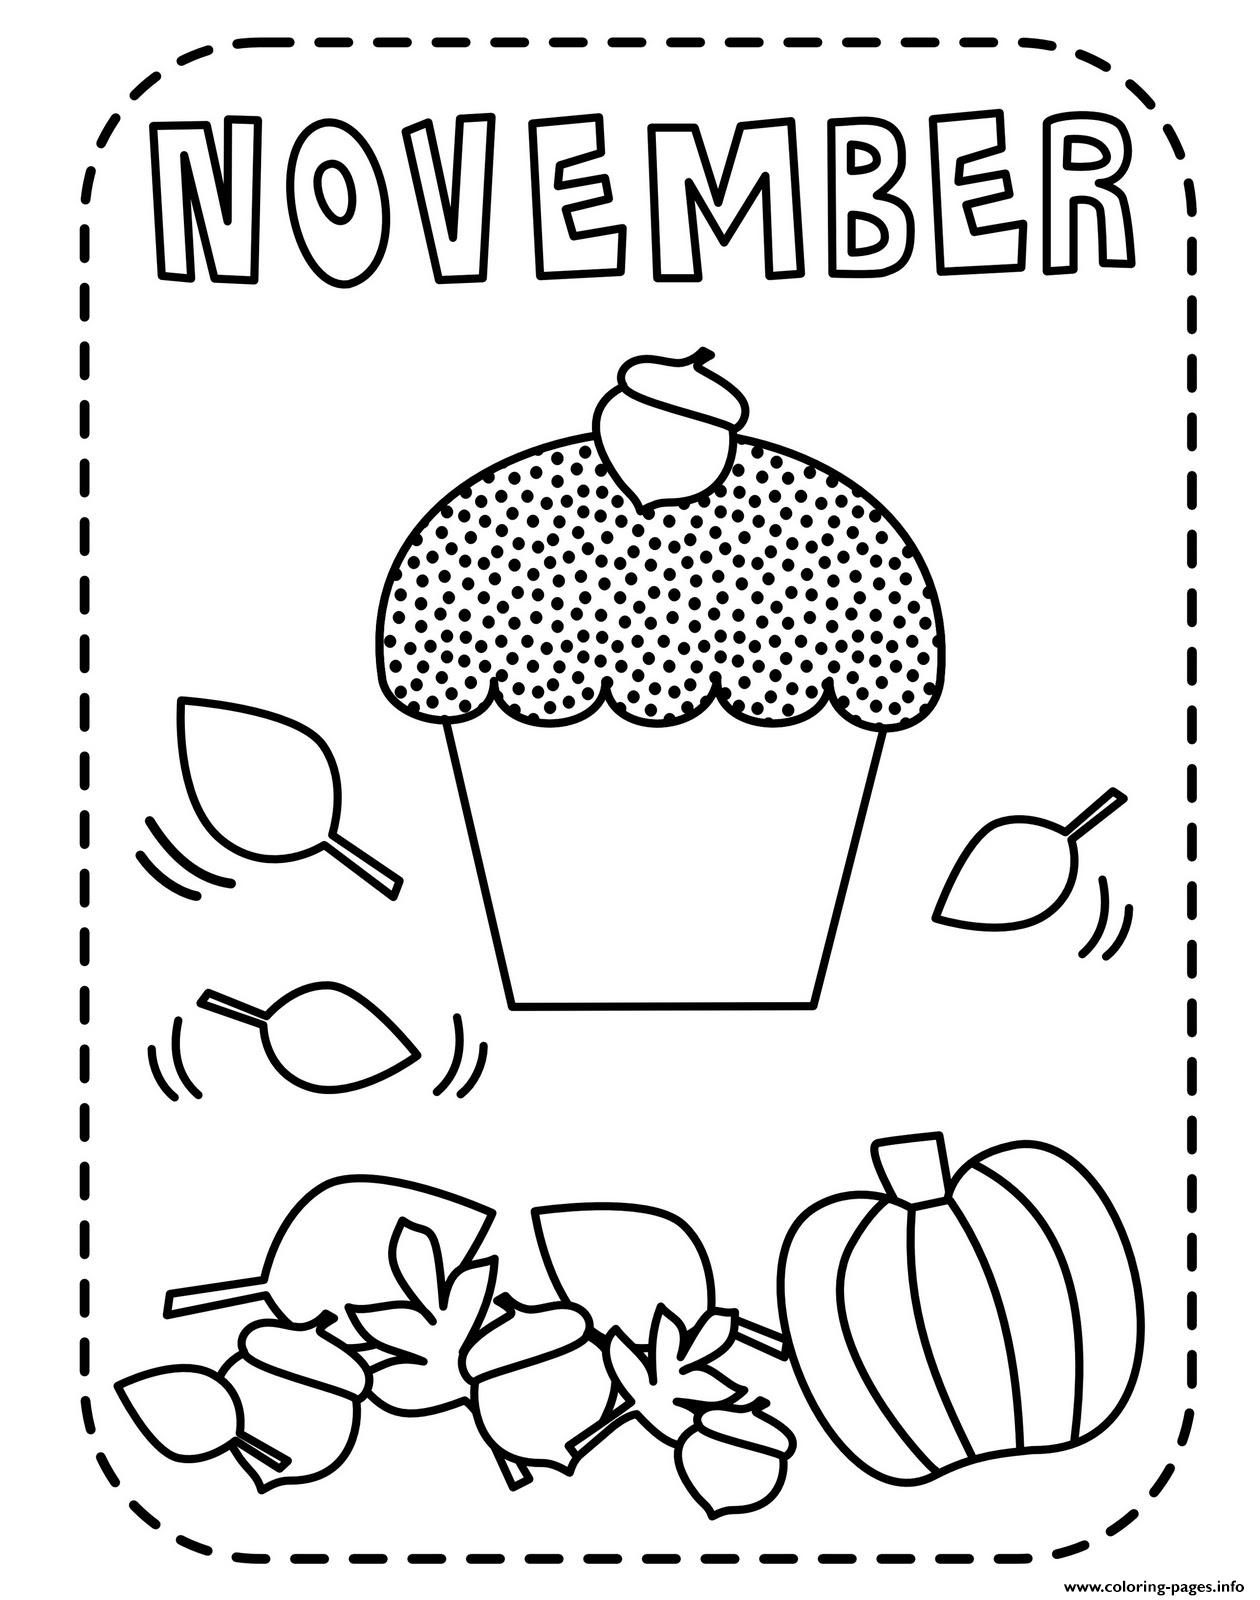 November For Kids coloring